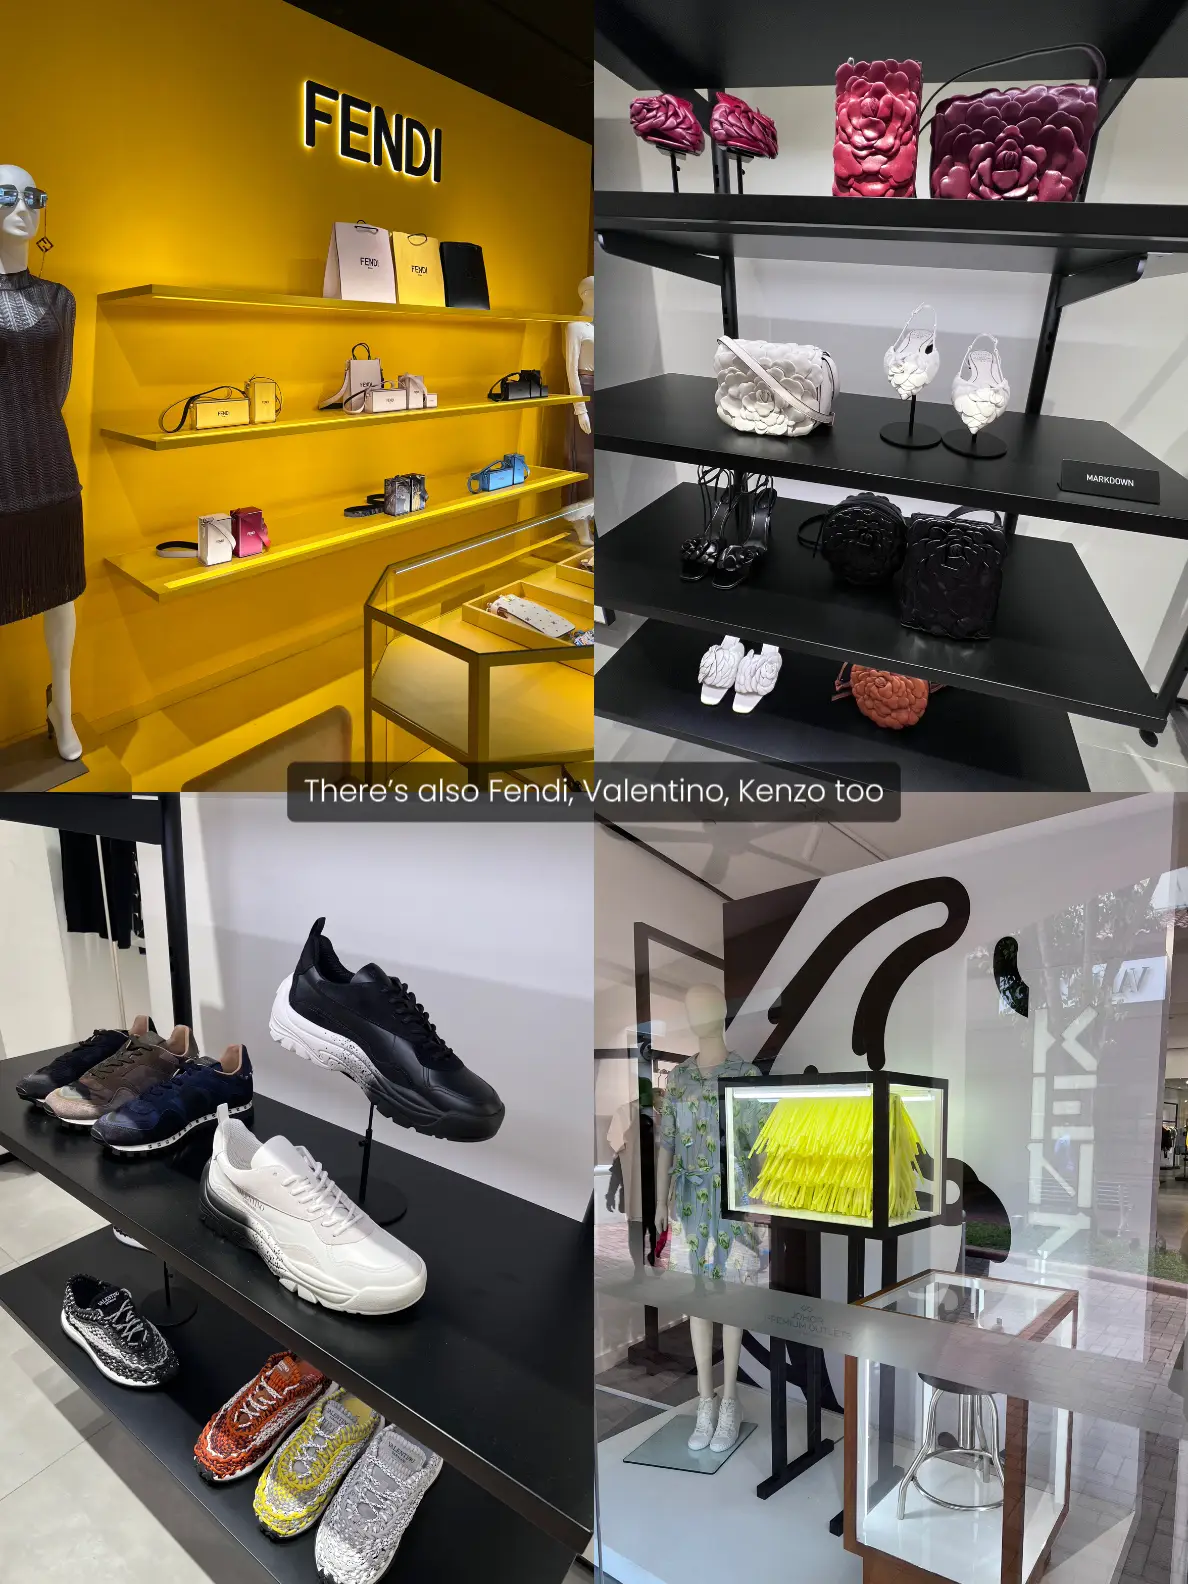 Nike Factory Store - Johor Premium Outlets. Indahpura, MYS.  SK